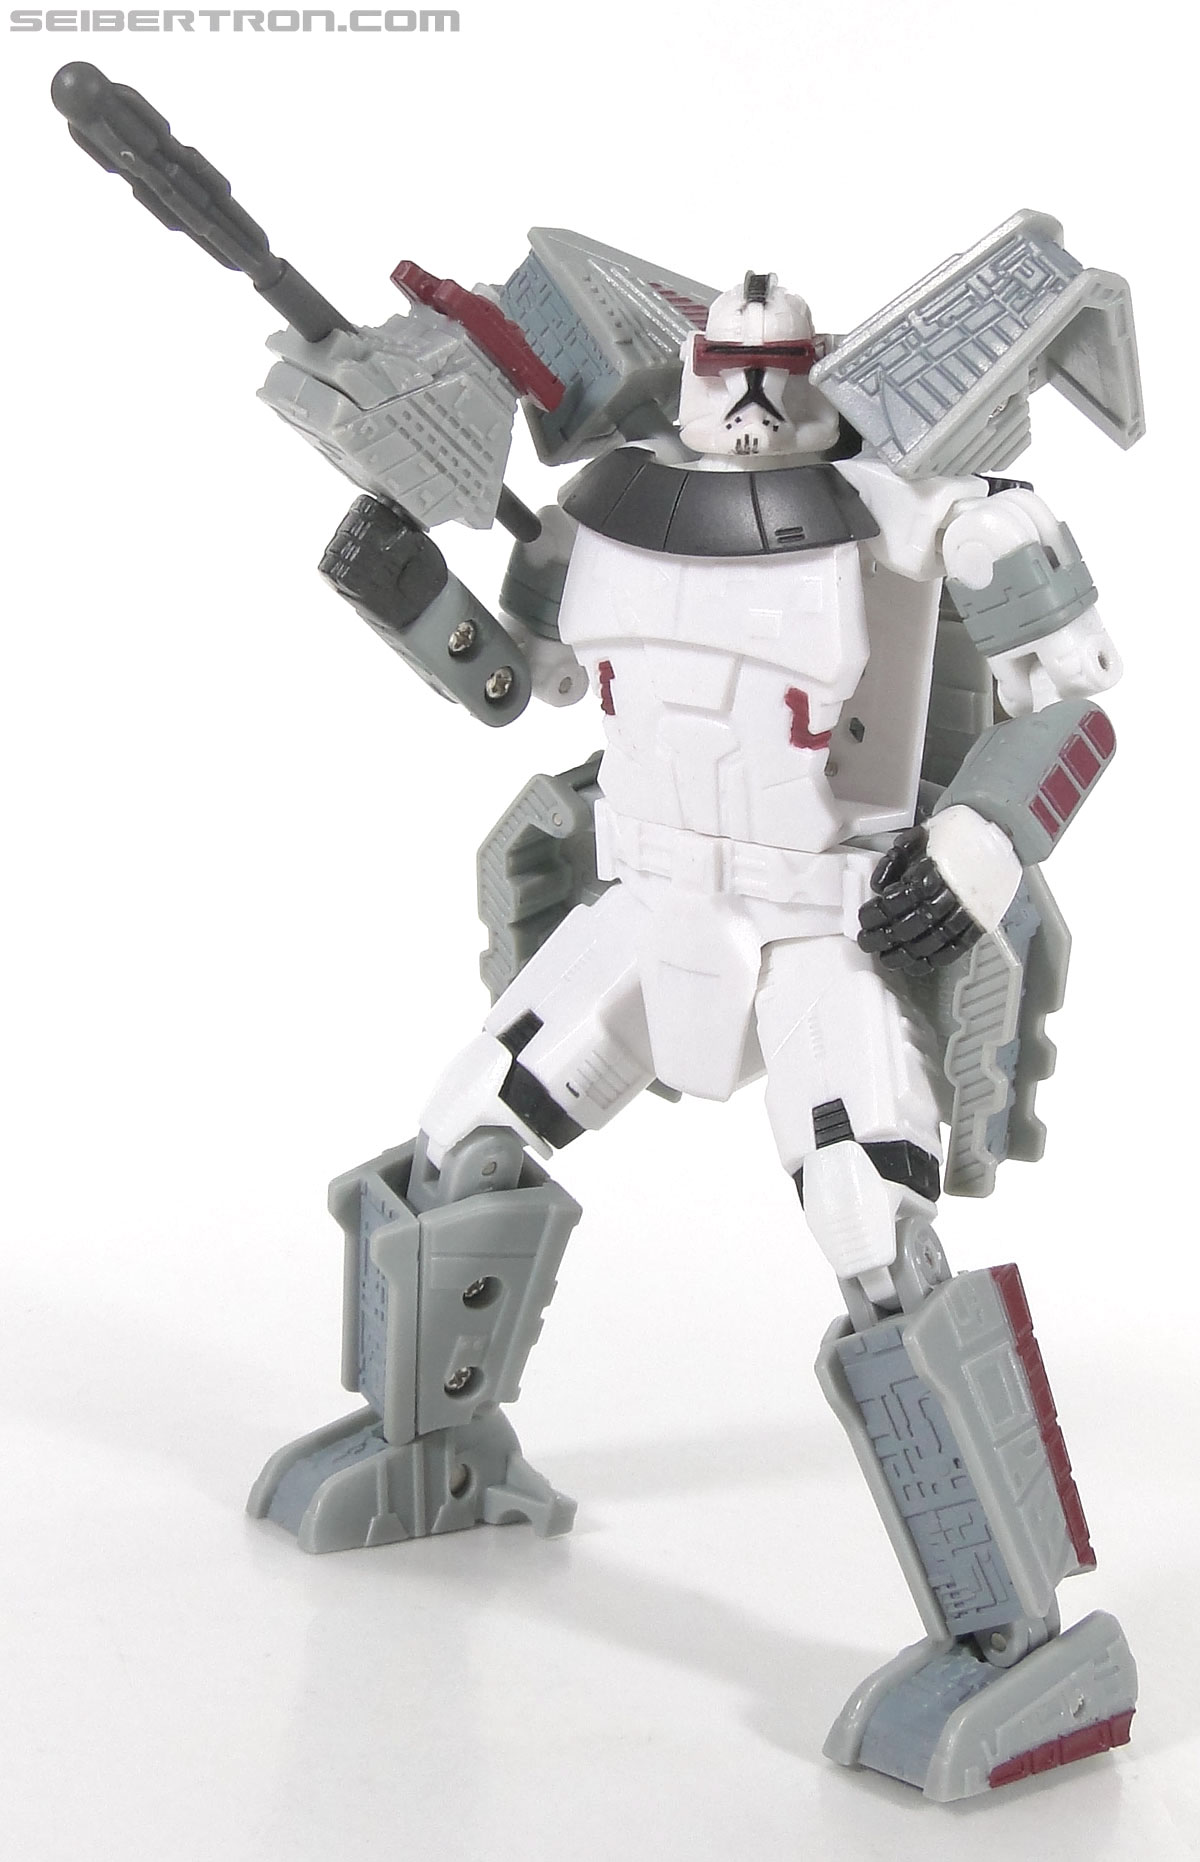 Star Wars Transformers Lieutenant Thire (Republic Attack Cruiser) (Image #59 of 76)